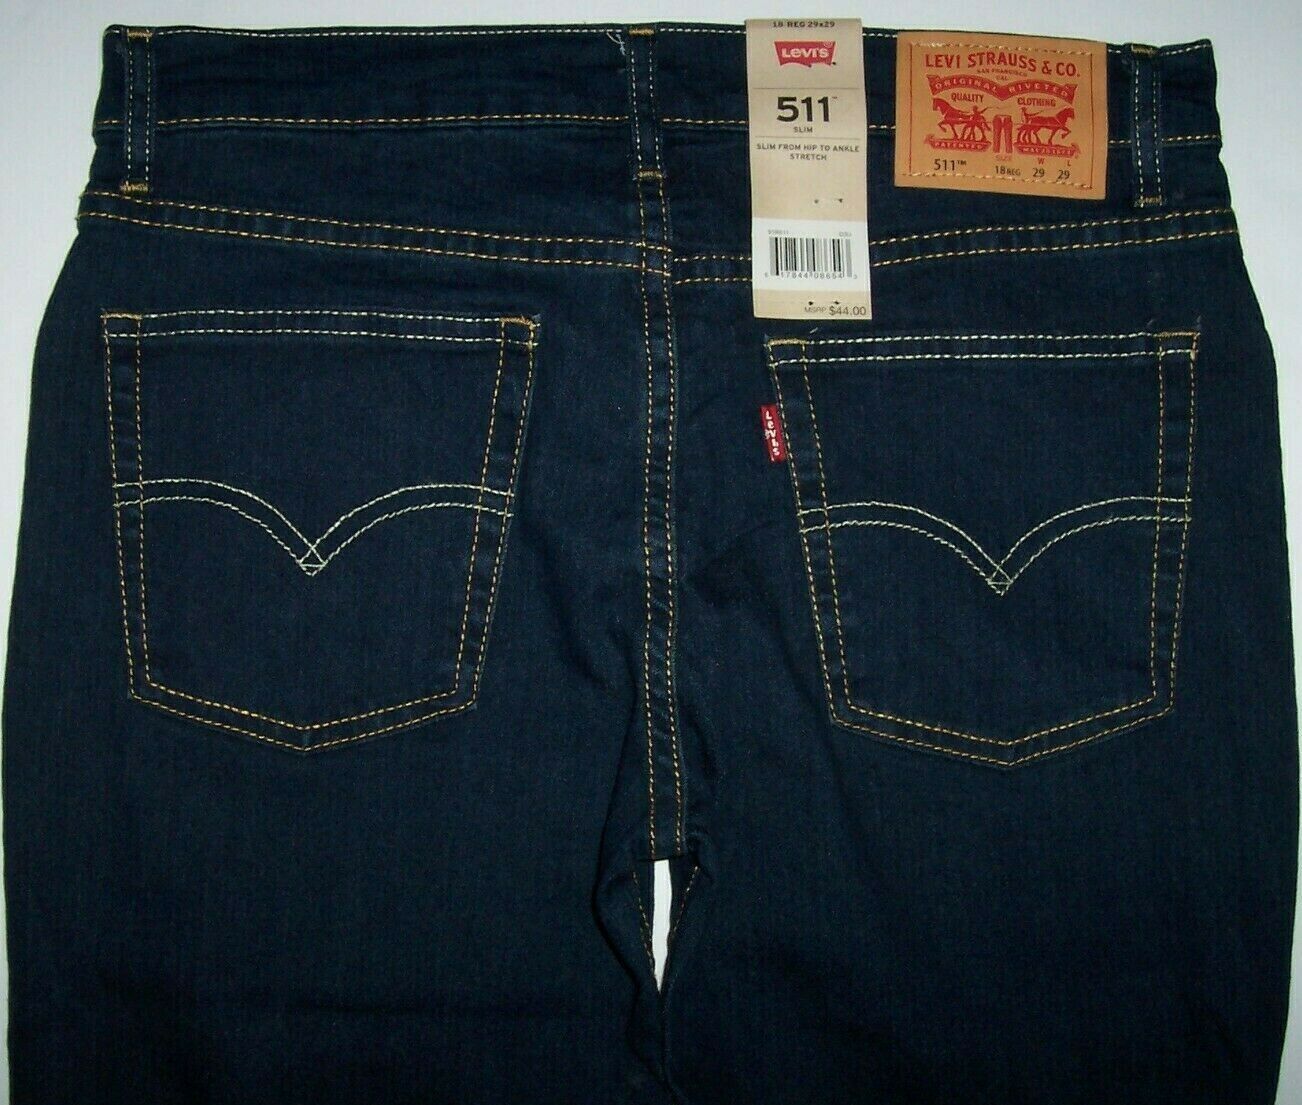 Nwt Levi's 511 Slim Fit Dark Blue Denim Jeans Pants Boys 18 29 X 29 Red Tab Nice